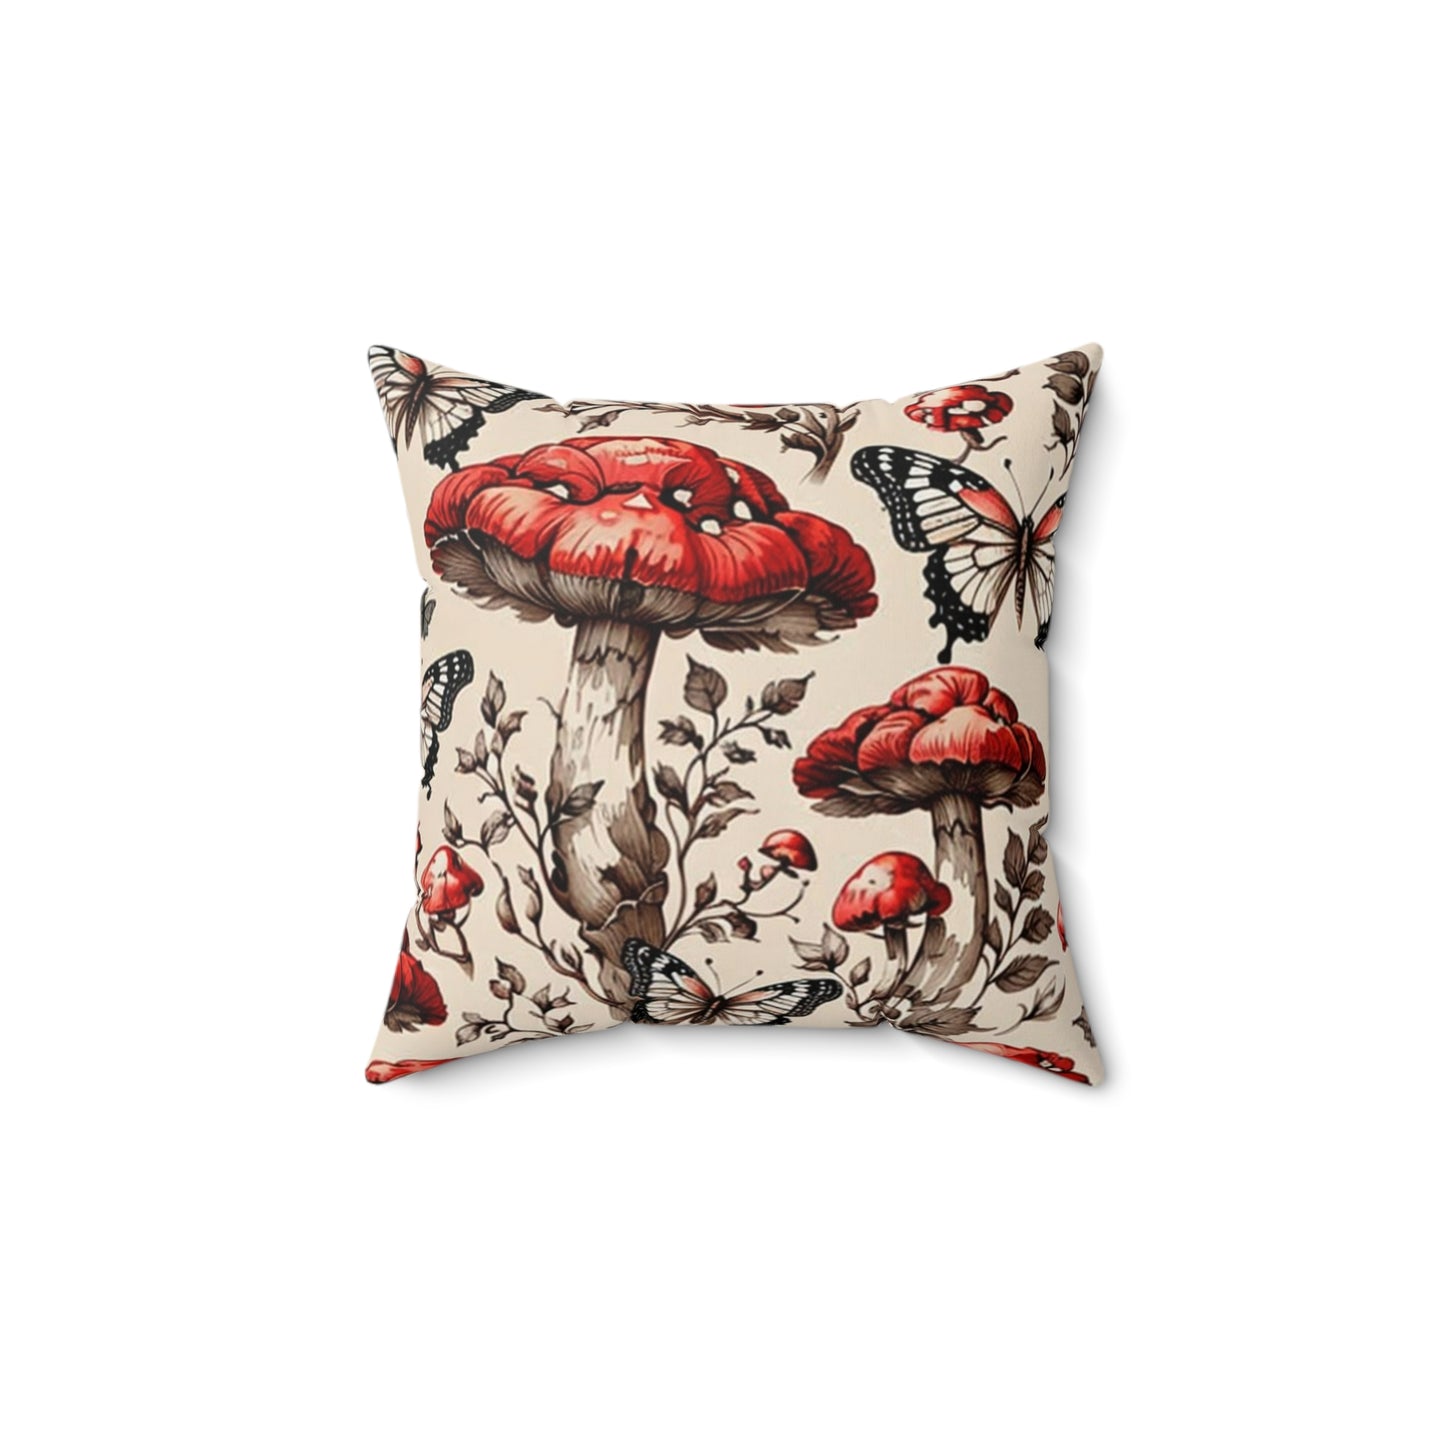 Vintage Mushroom Pillow for Home Deco, Square, Red, Butterflies, Tan, Boho Room, Living Space, Unique Design, Original Print